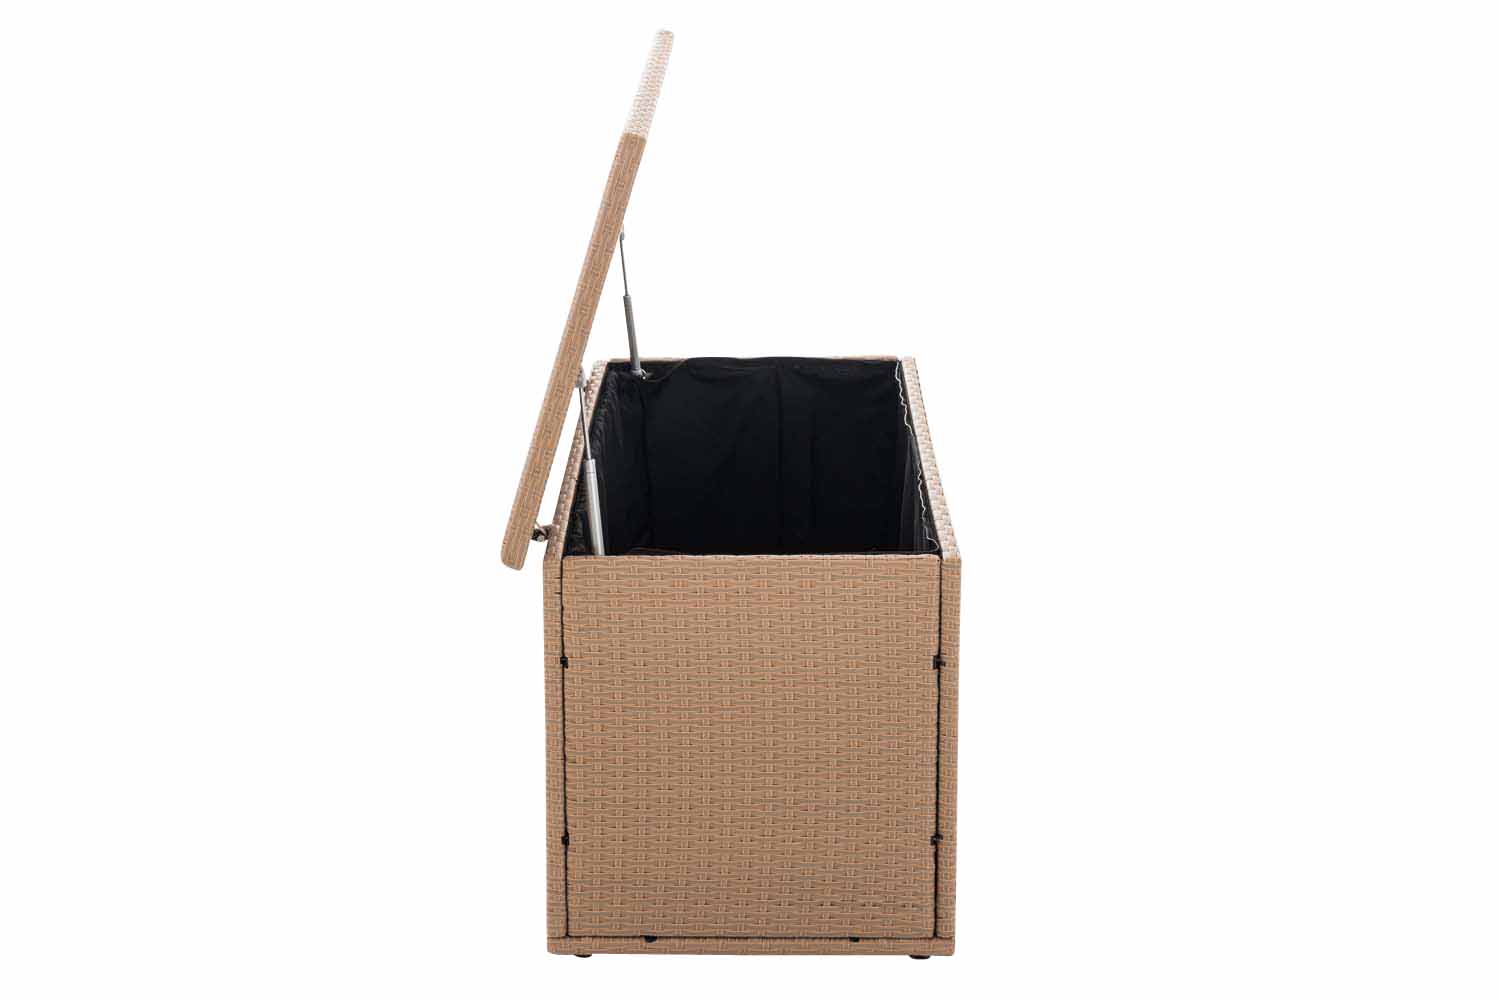 Polyrattan Auflagenbox Comfy sand 150 cm